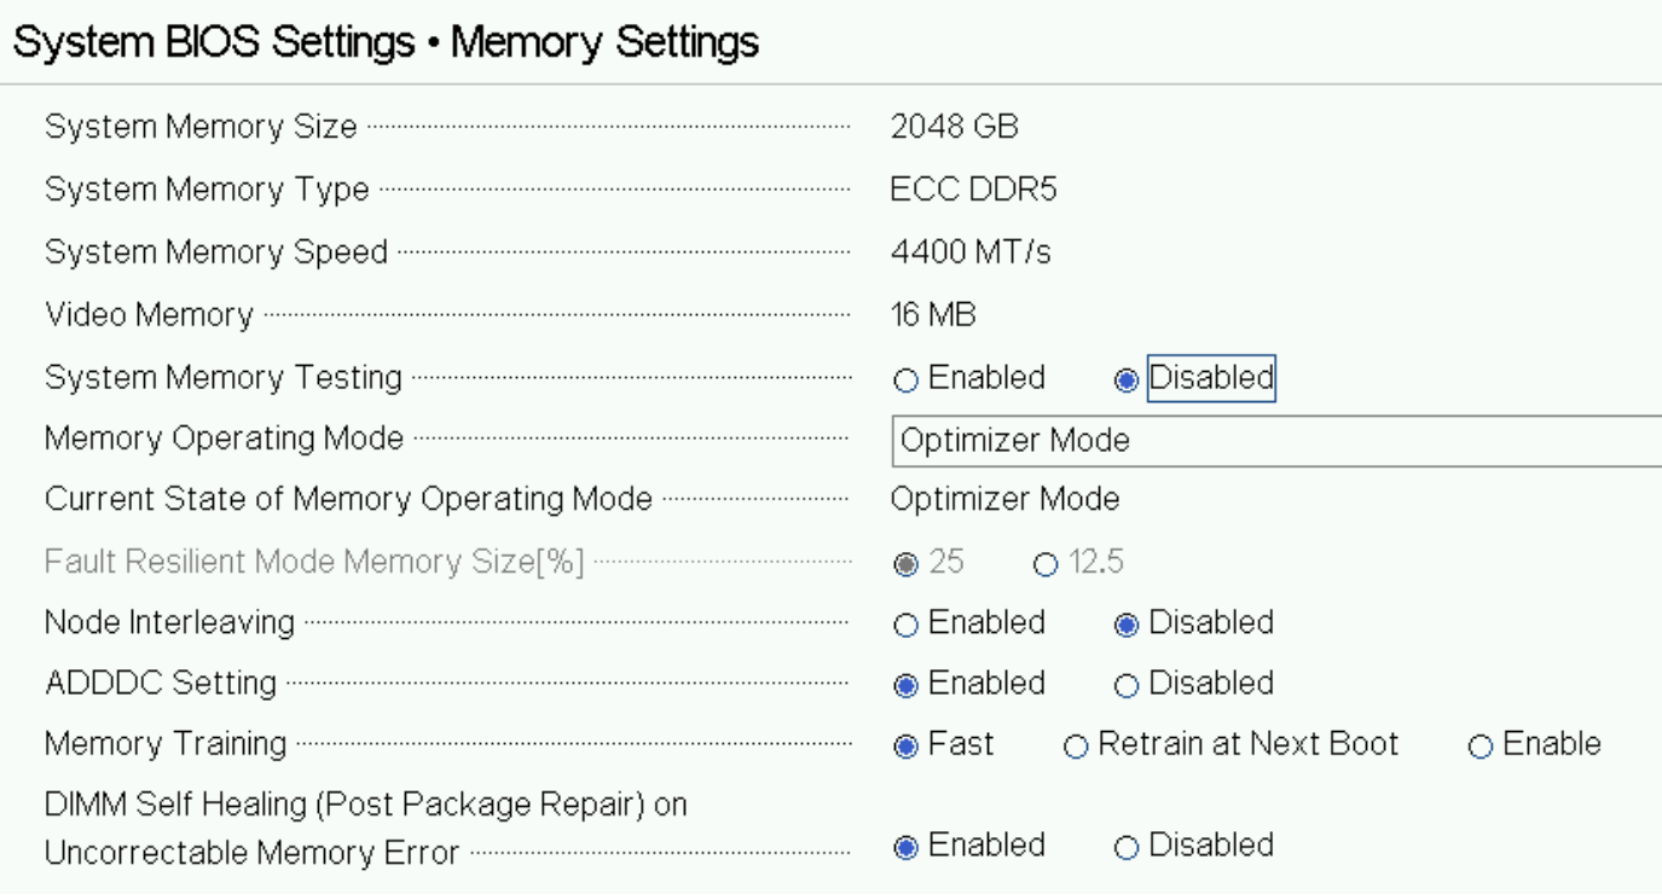 A screenshot showing System Bios Memory Operating Mode settings